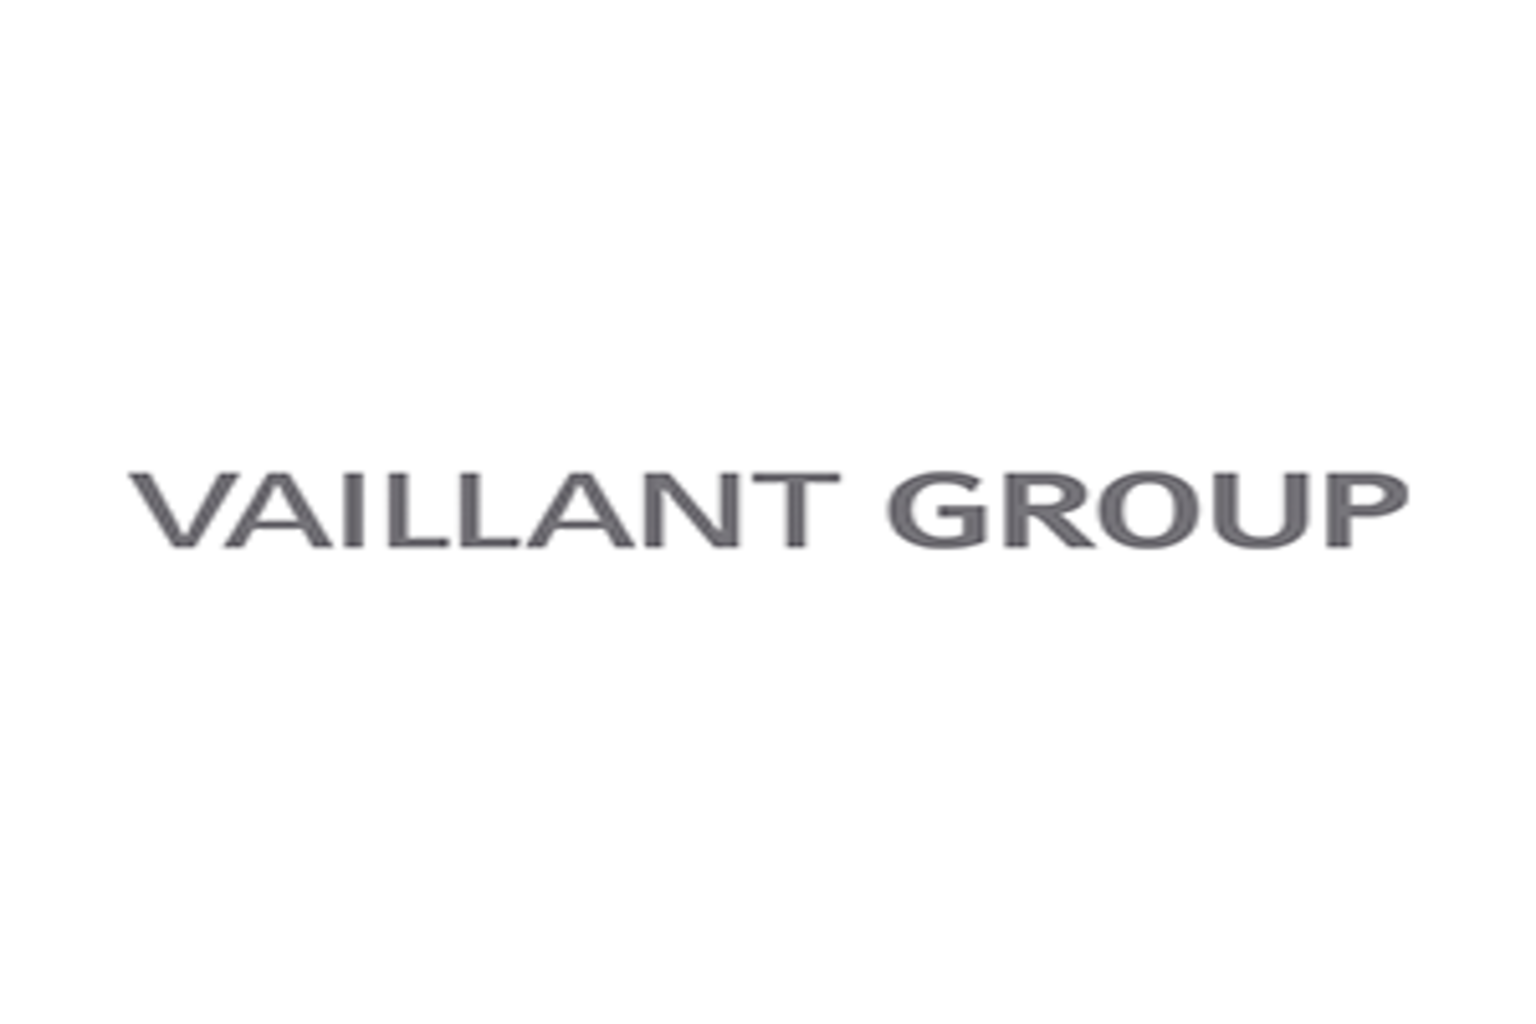 Vaillant-group-1536x1024